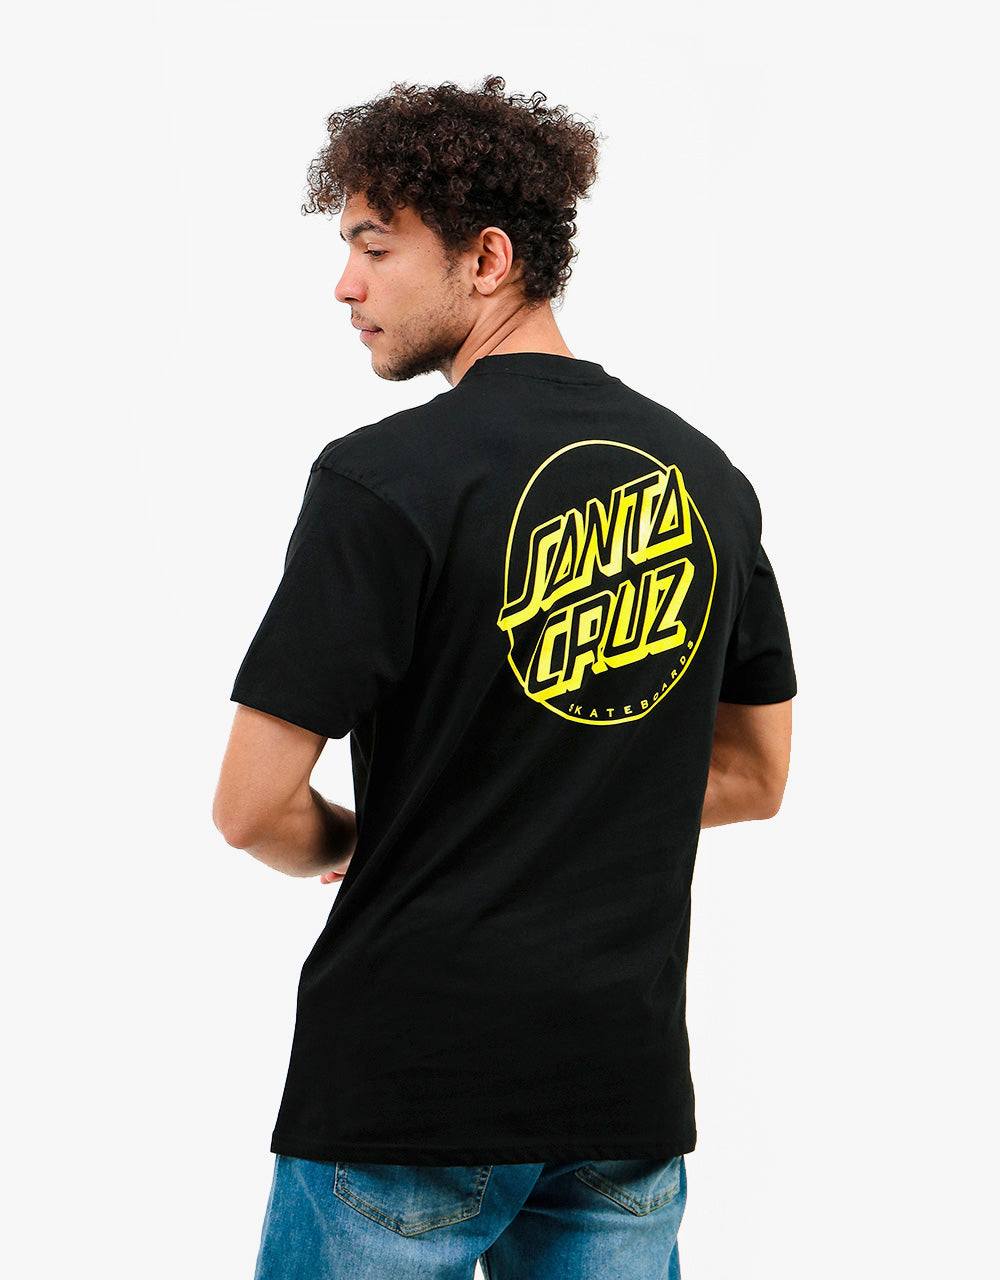 Santa Cruz Opus Dot Stripe T-Shirt - Black/Yellow